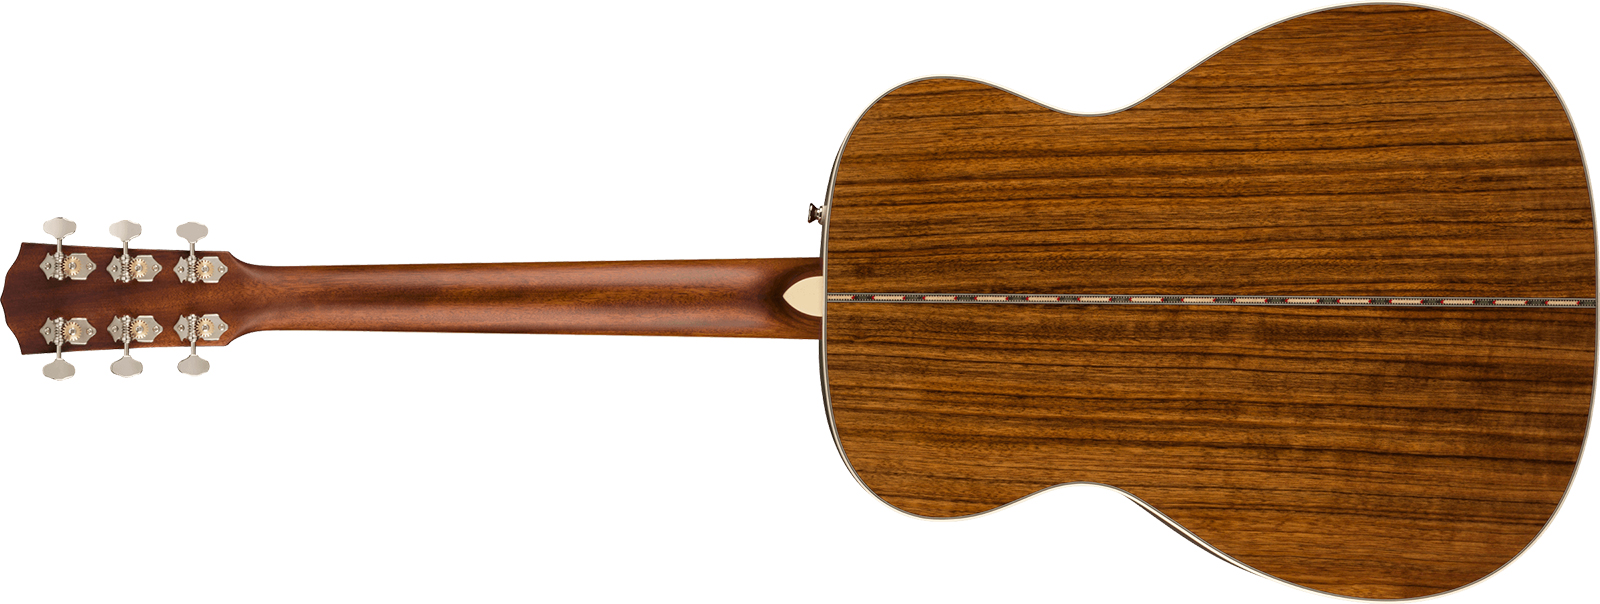 Fender Po-220e Paramount Fsr Ltd Orchestra Model Om Epicea Ovangkol Ova - Aged Natural - Elektroakustische Gitarre - Variation 1